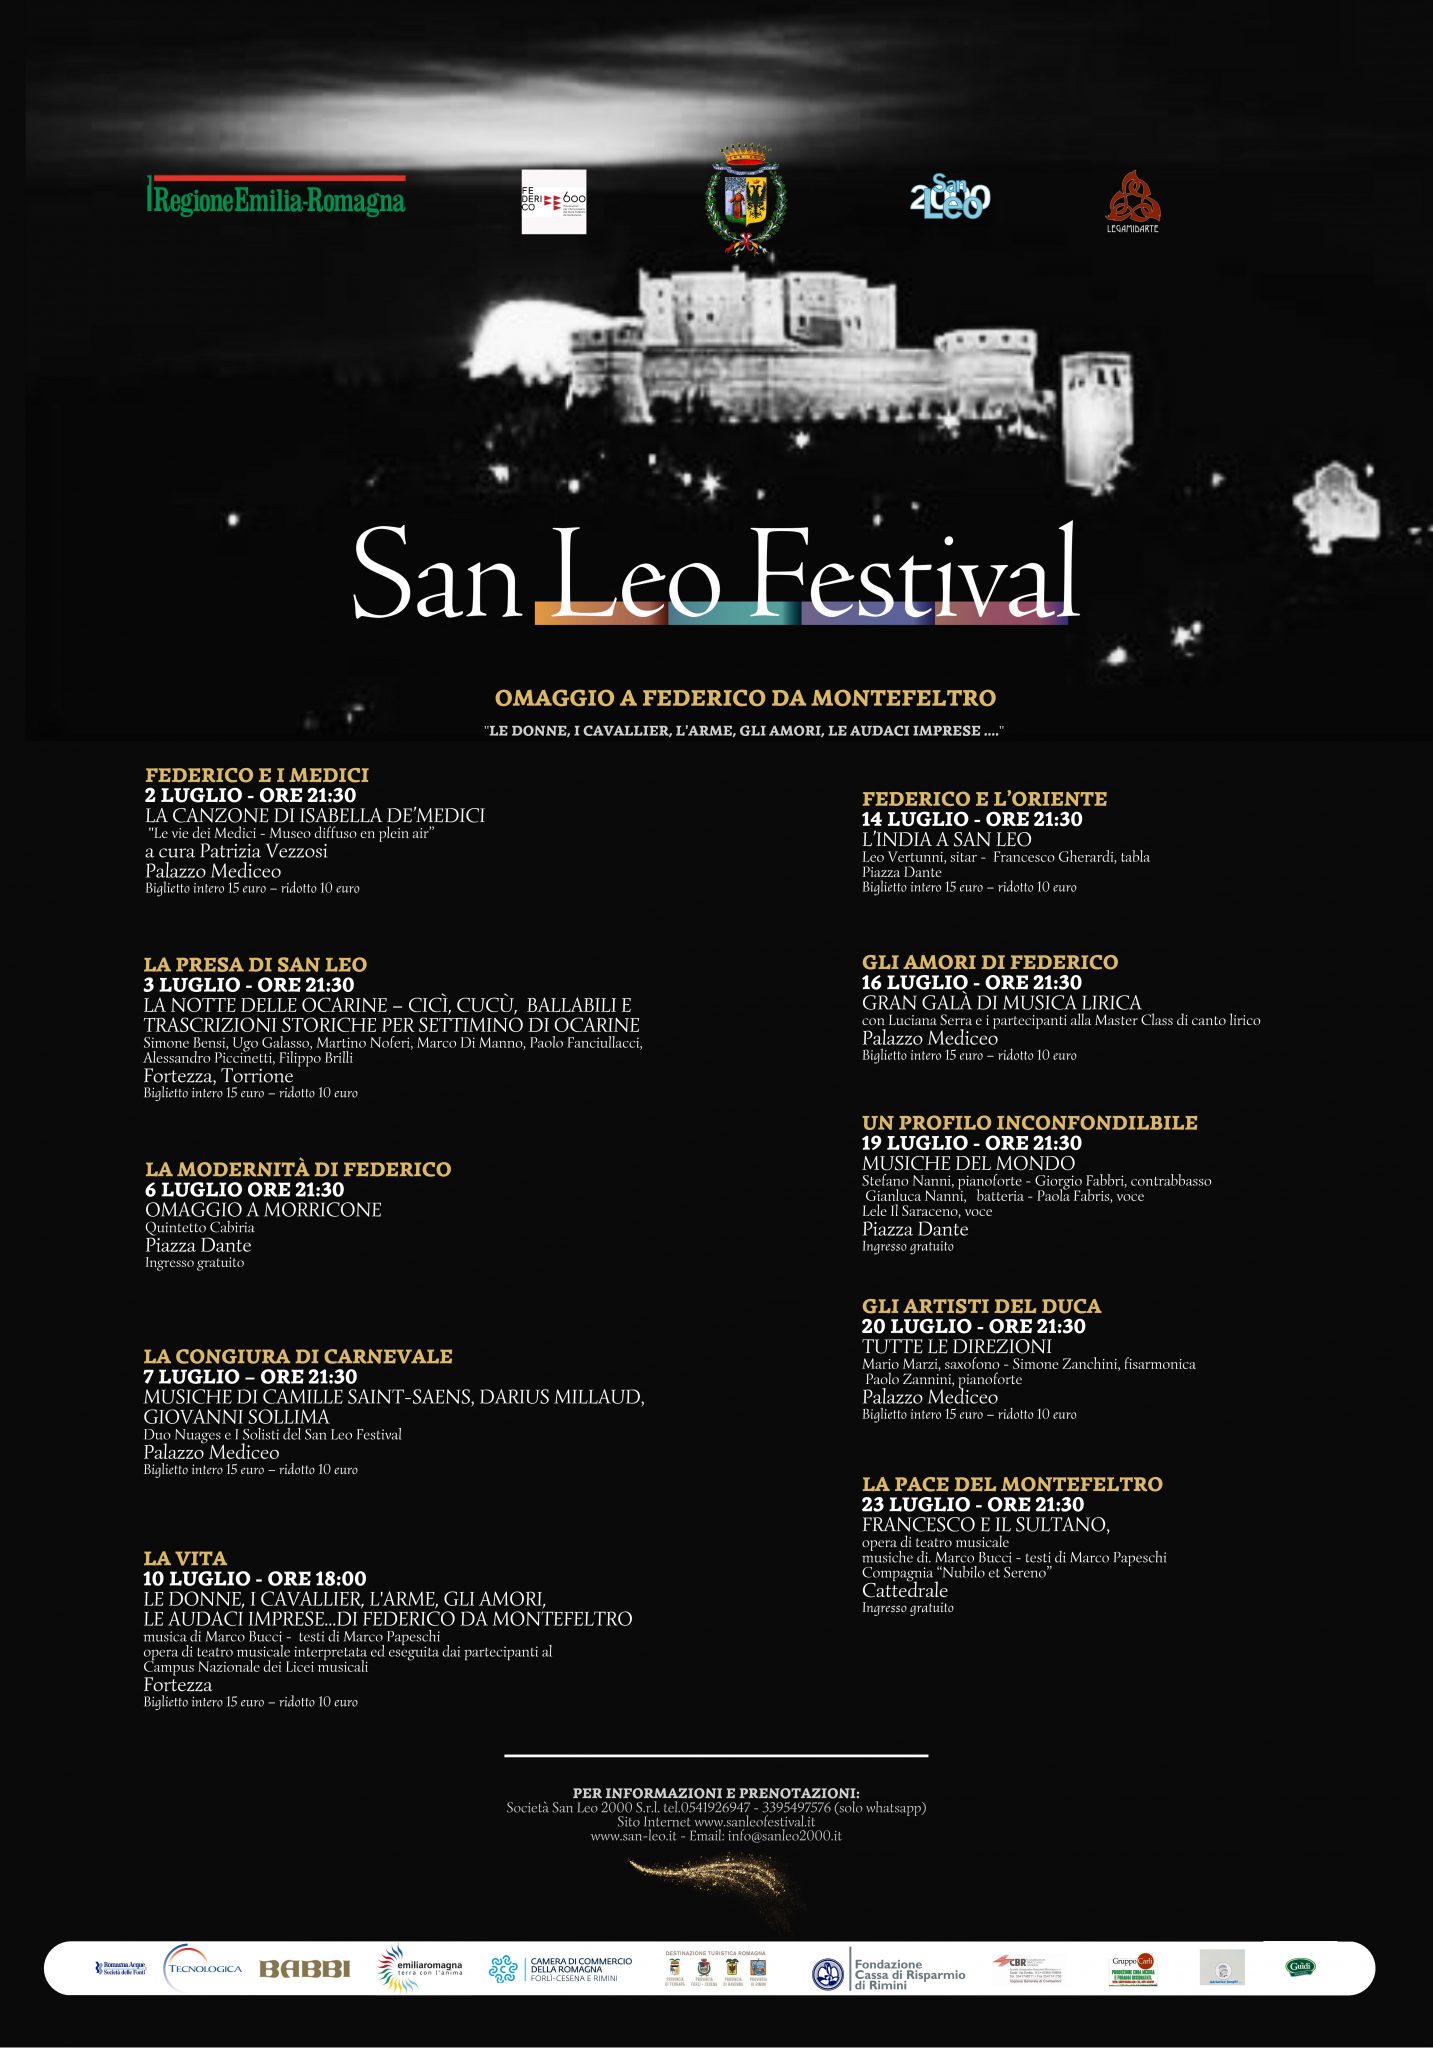 San Leo Festival